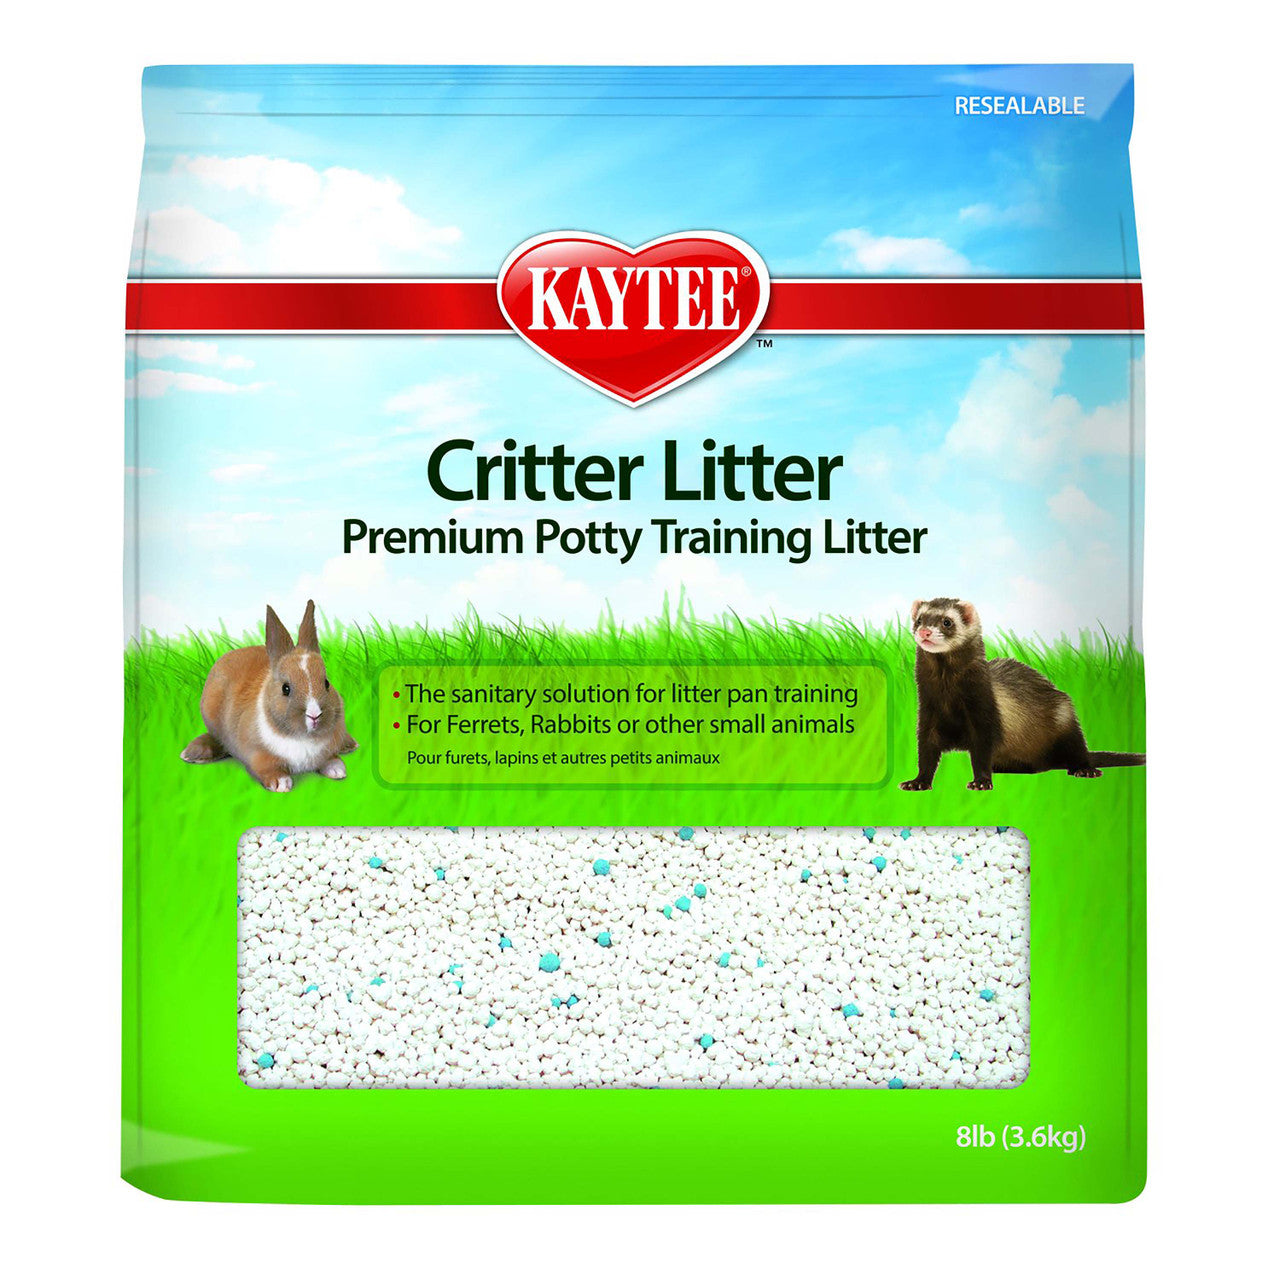 Kaytee Critter Litter Small Animal Premium Potty Training Litter, 8 Pound